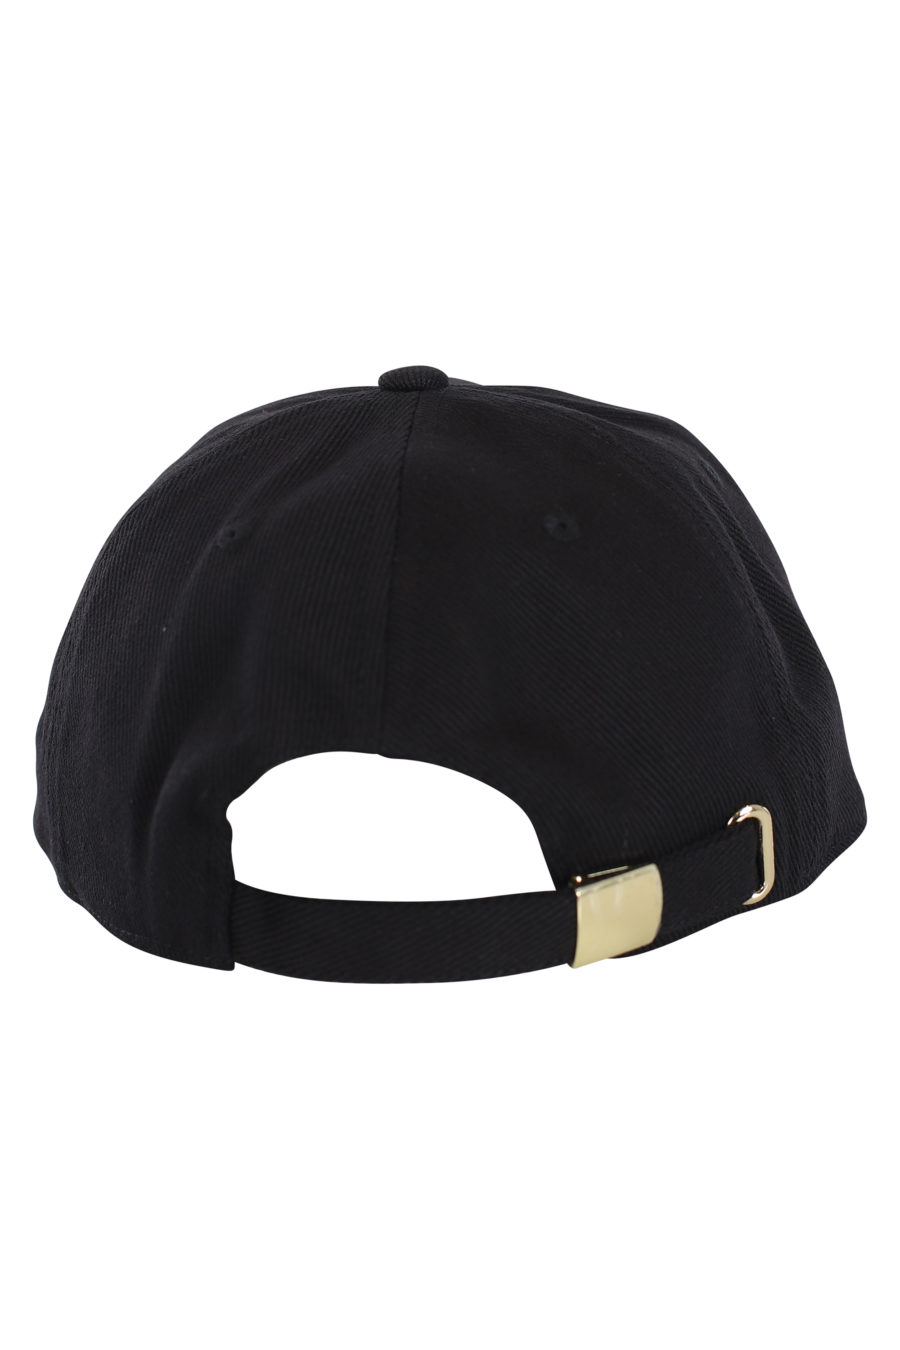 Schwarze Kappe mit gesticktem Logo in Gold - IMG 0136